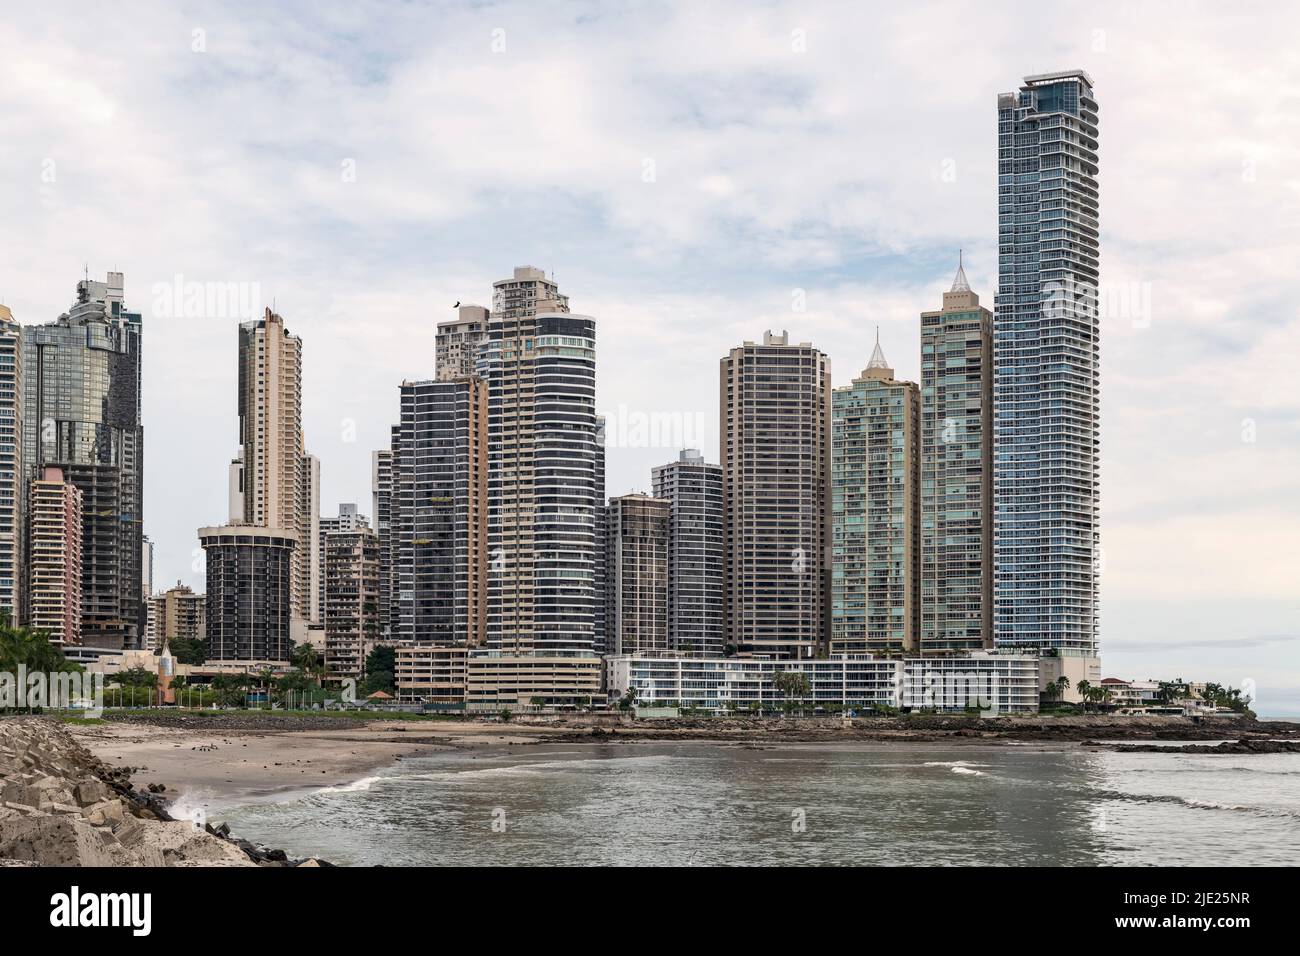 Panama City, Panama - October 28, 2021: View at the skyline of skyscrapers in Panama City, Panama. Stock Photo